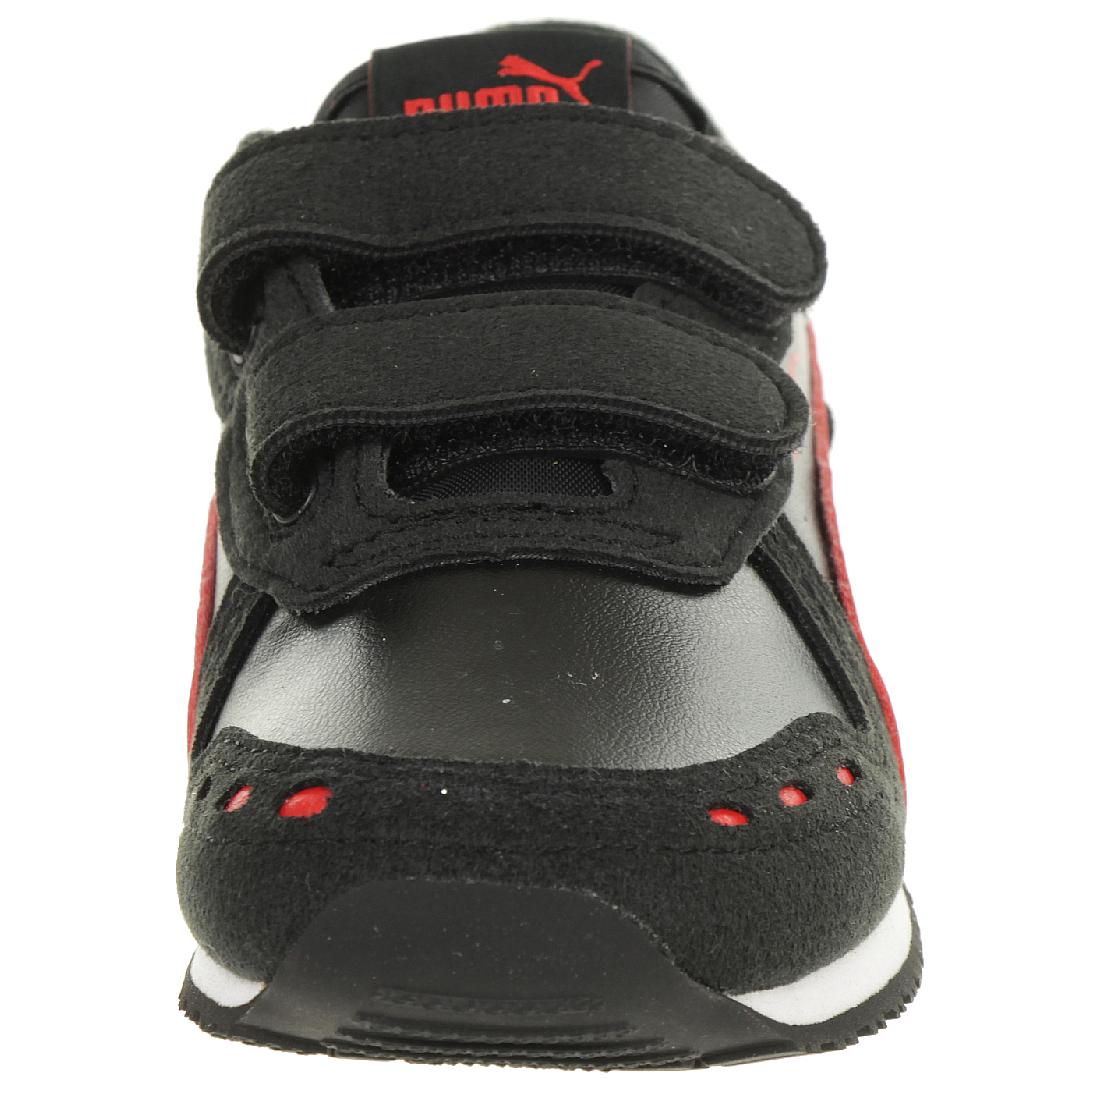 PUMA Cabana Racer SL V Inf Kinder Sneaker Klettverschluss schwarz 351980